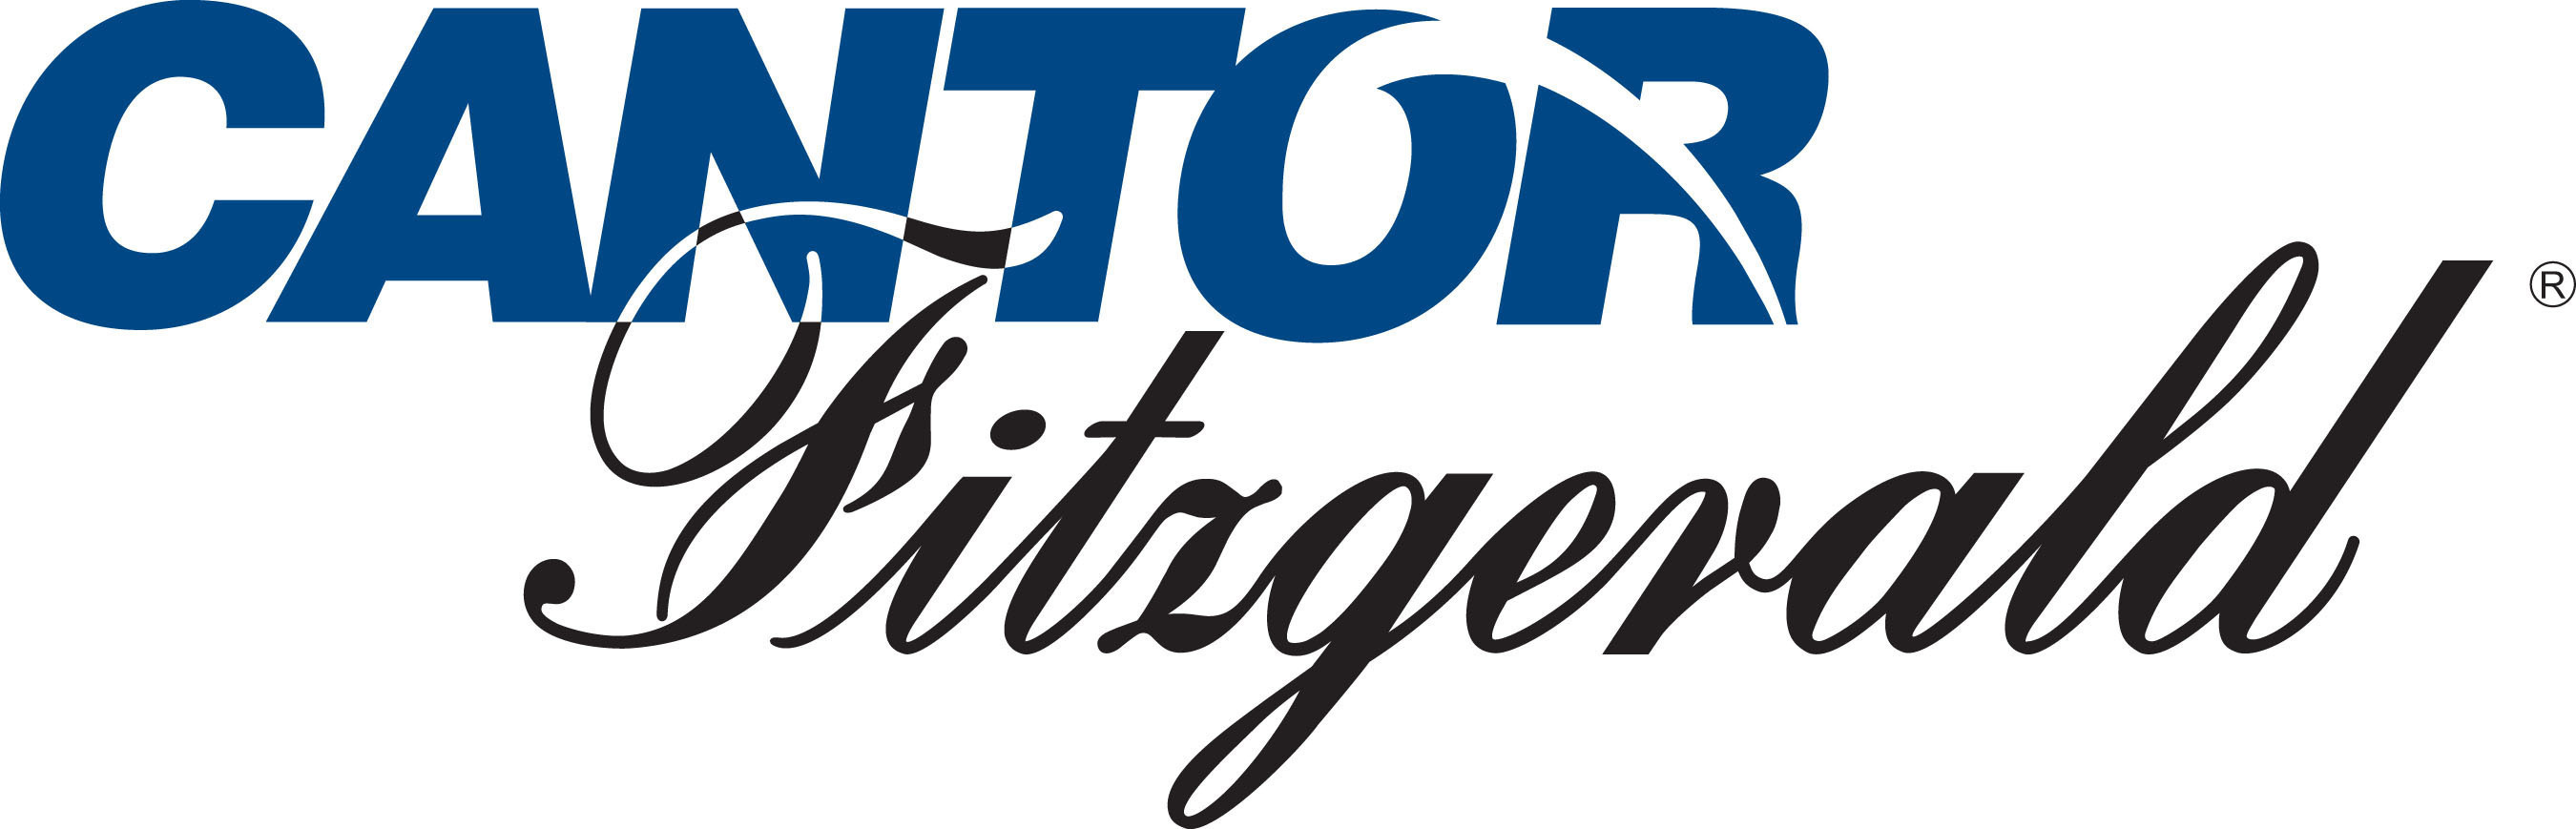 Cantor Fitzgerald Logo.